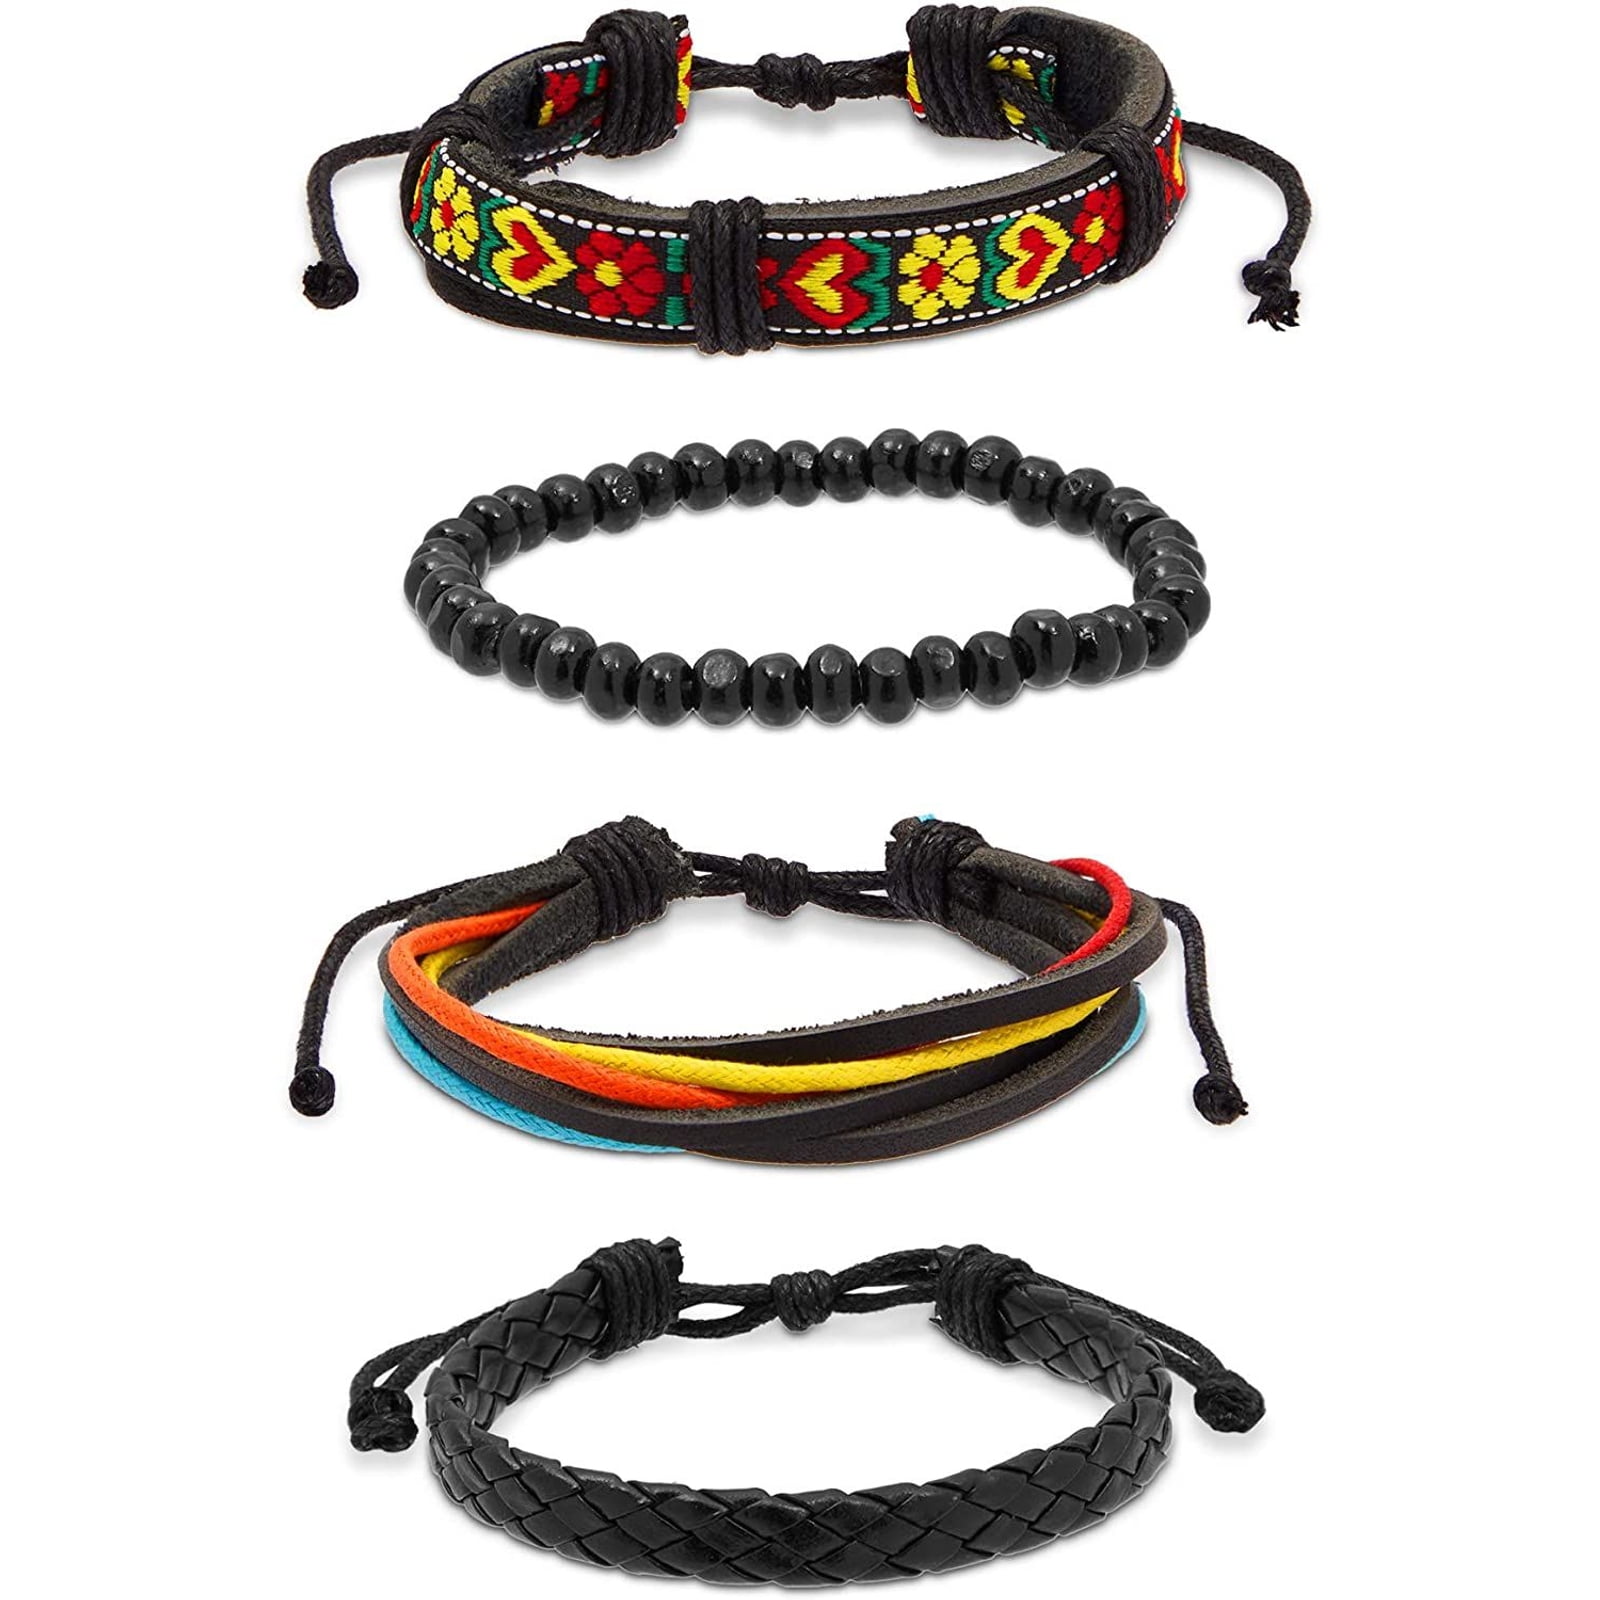 4 Piece Set of Believe Adjustable Braided Leather Bracelets for Men or Women